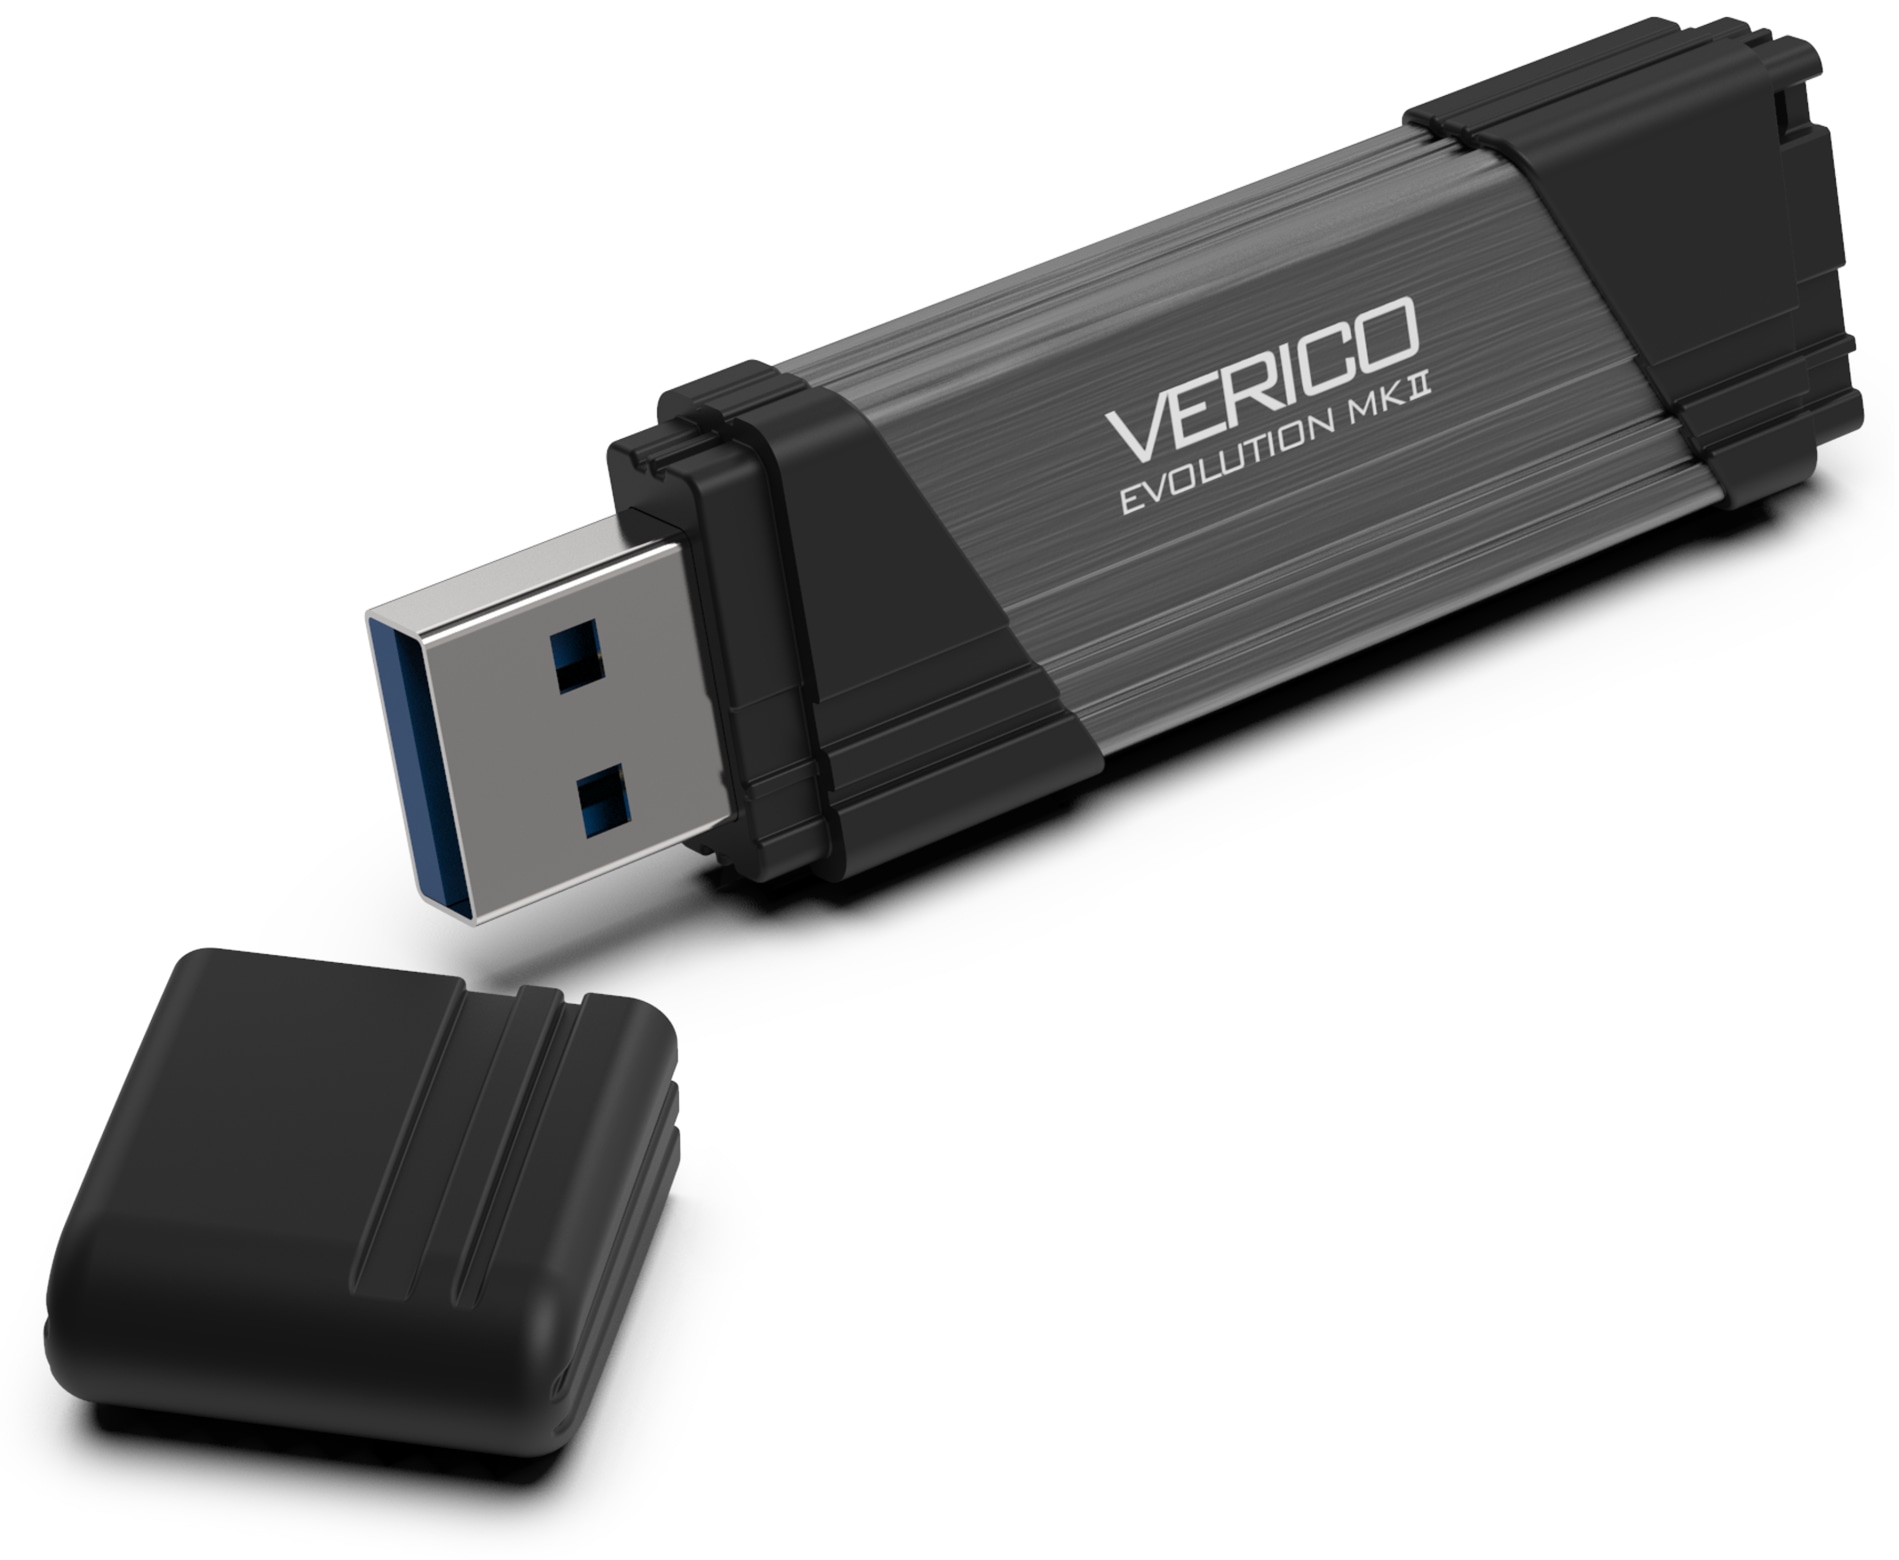 verico USB3.0 Stick Evolution MK-II, 256 GB, grau